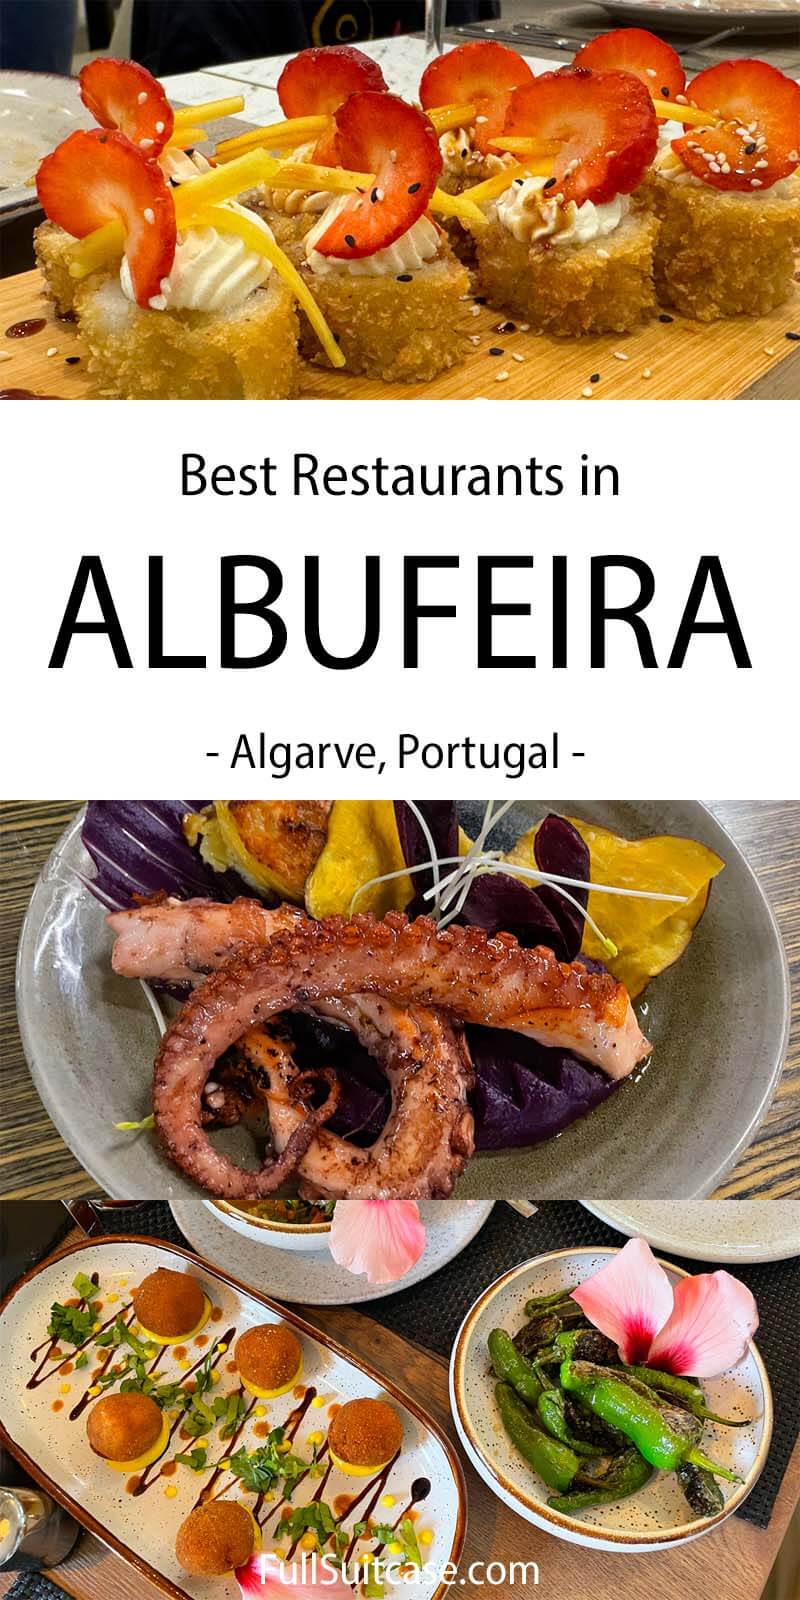 Best restaurants in Albufeira (Algarve Portugal)